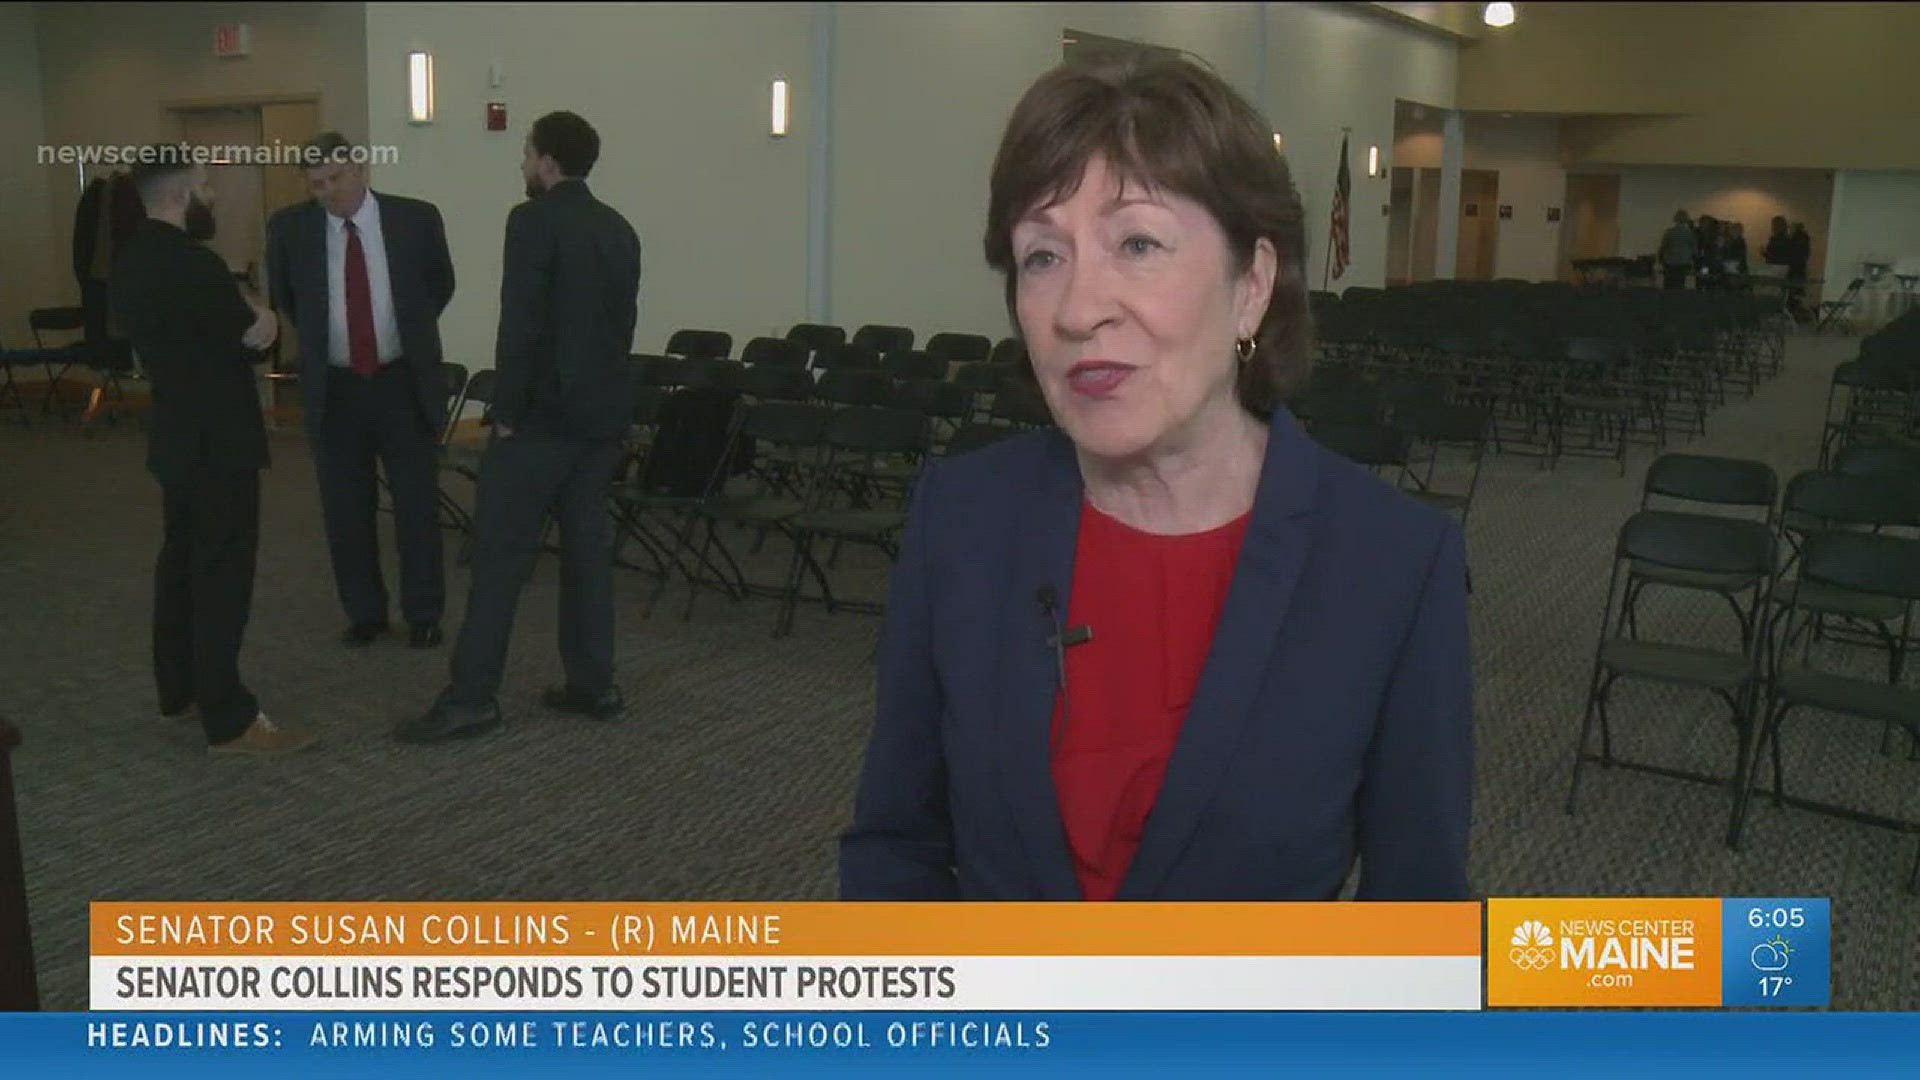 Senator Susan Collins responds to student protests about gun control